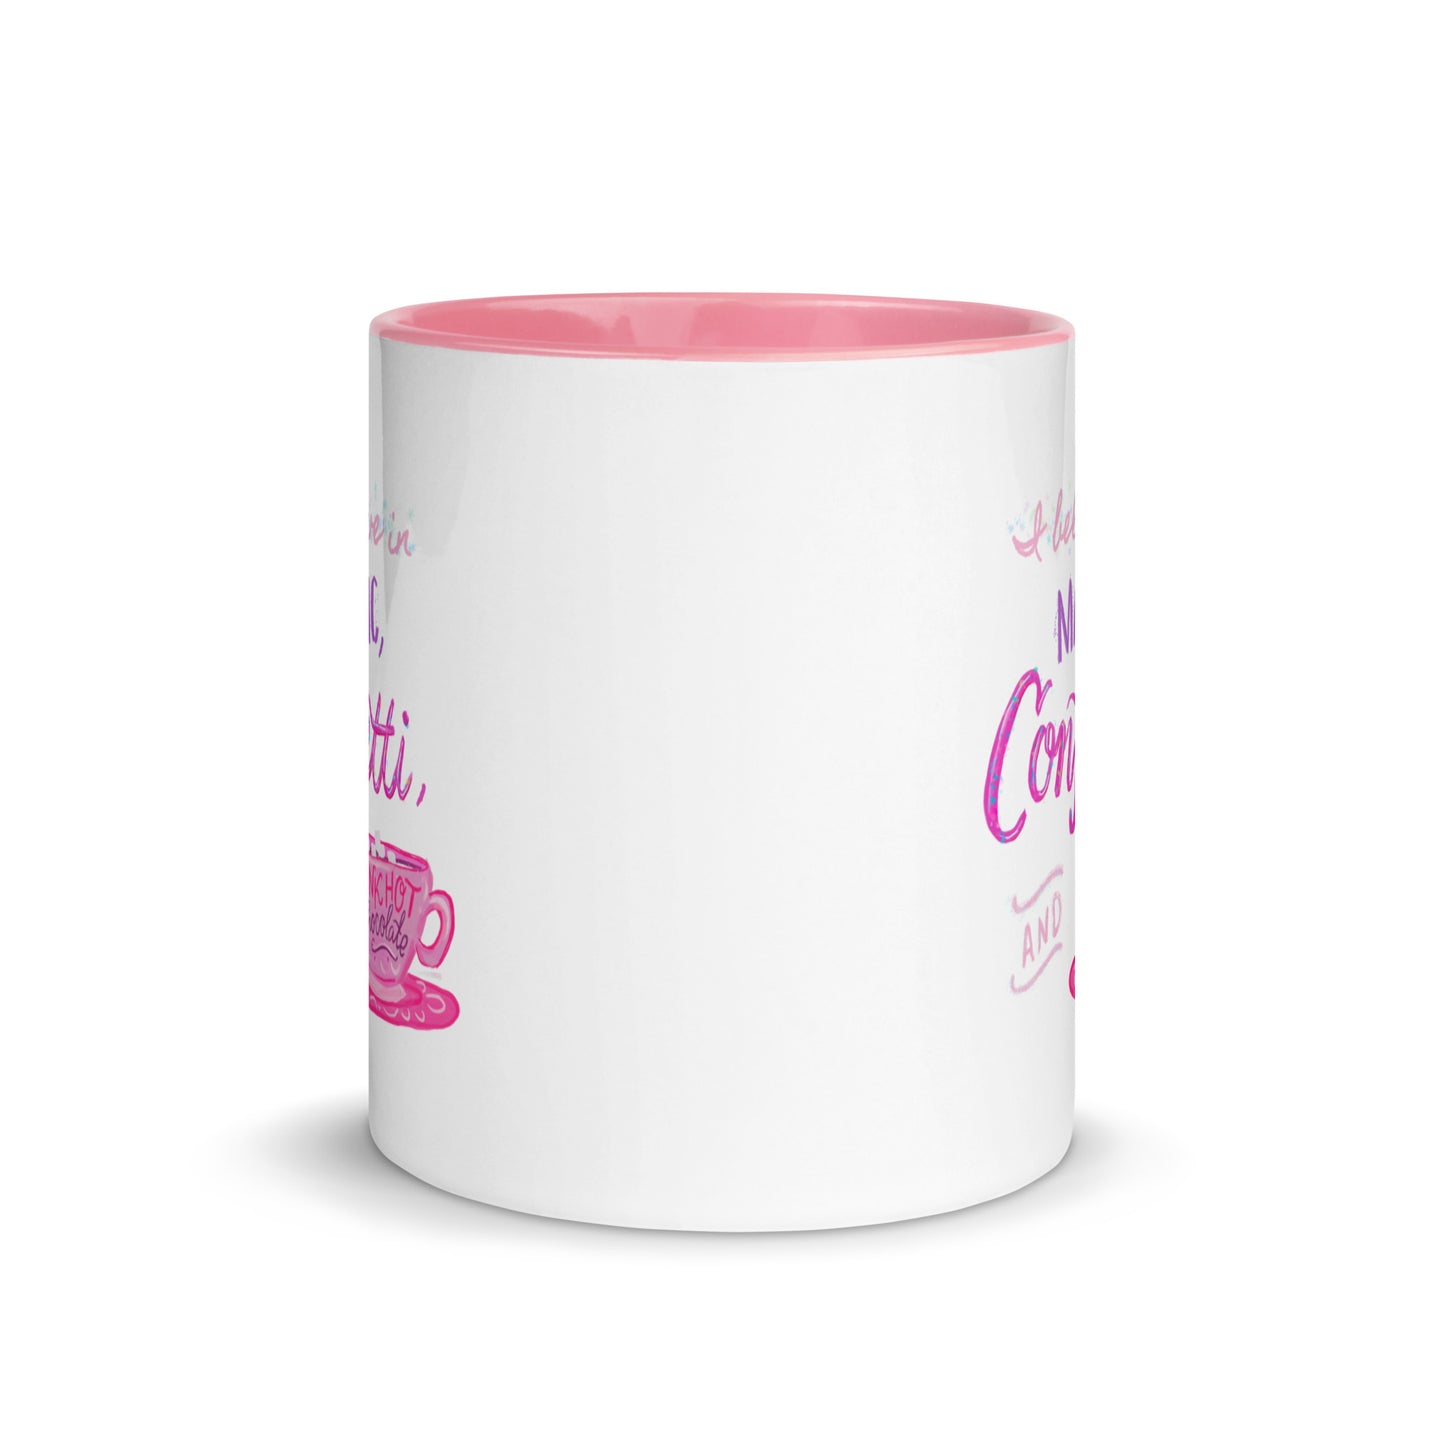 “I Believe in Magic, Confetti and Pink Hot Chocolate” Mug